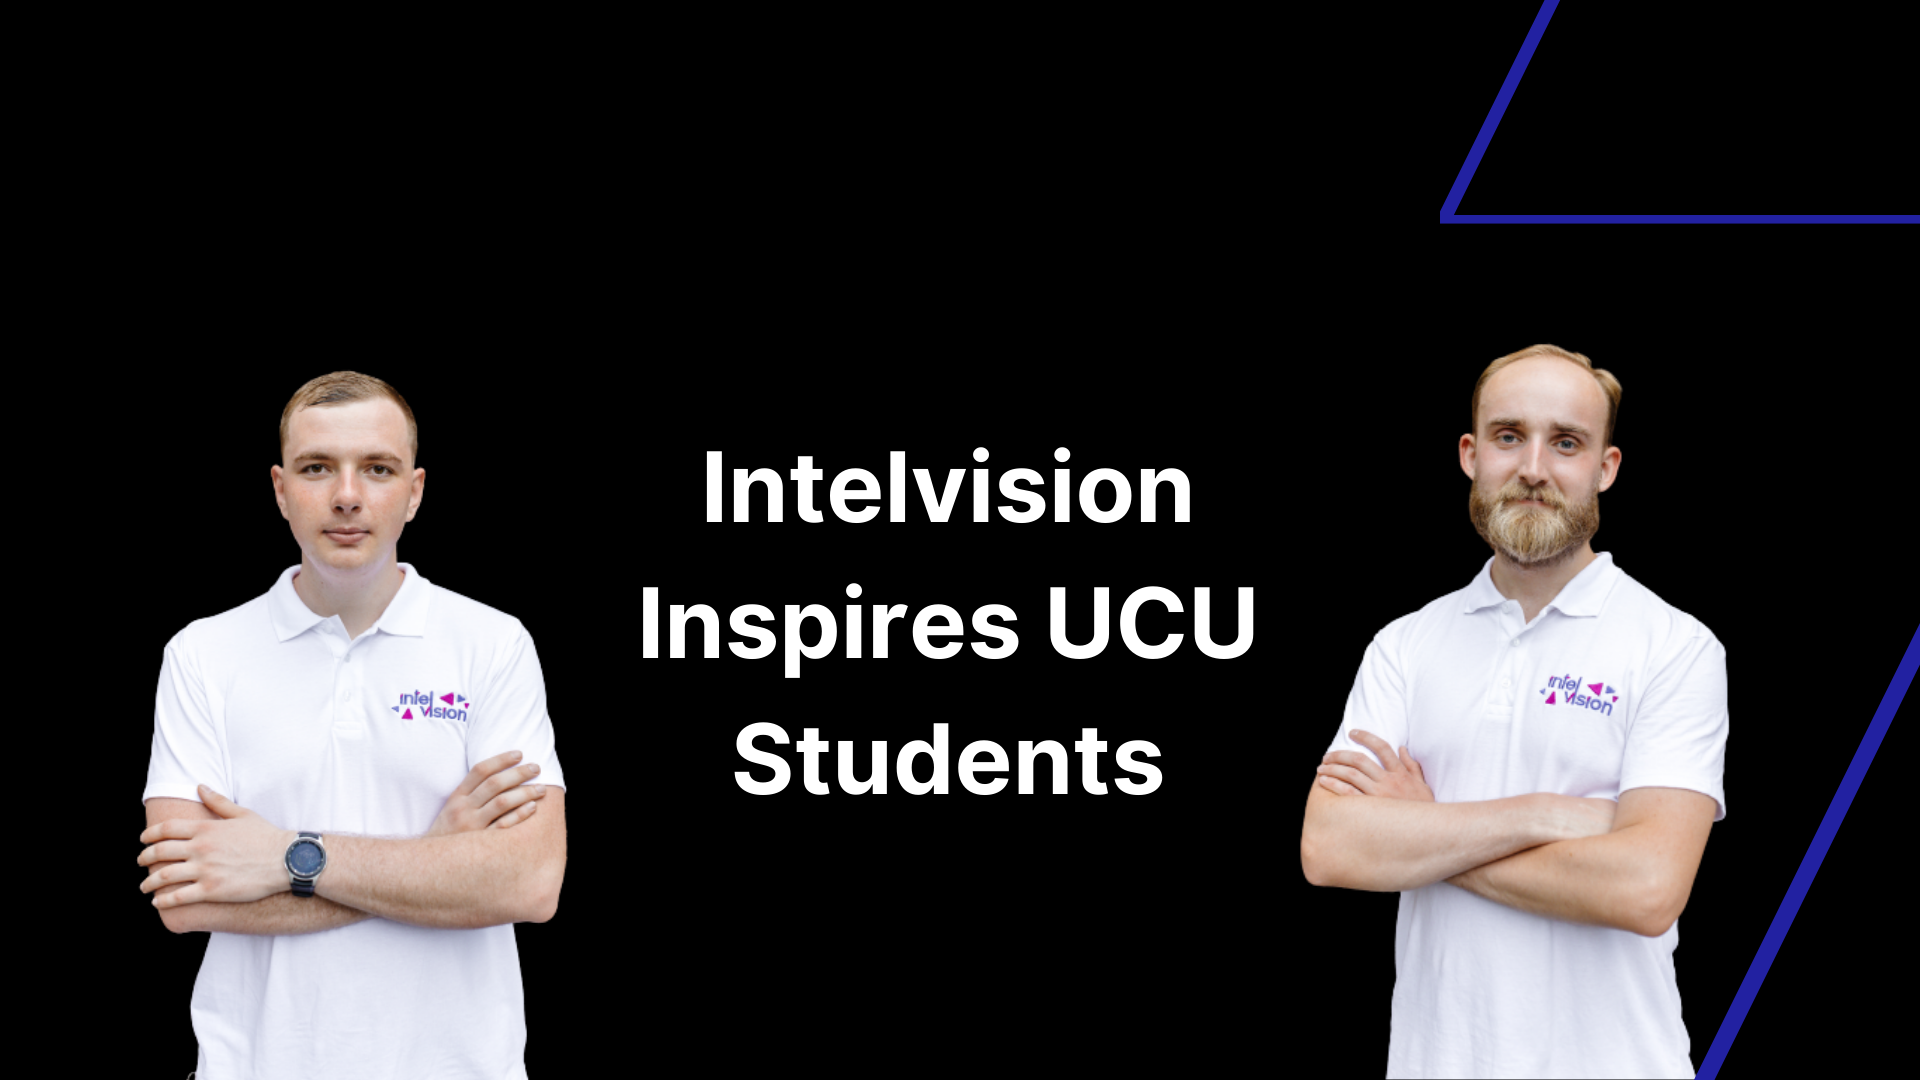 Intelvision Inspires UCU Students